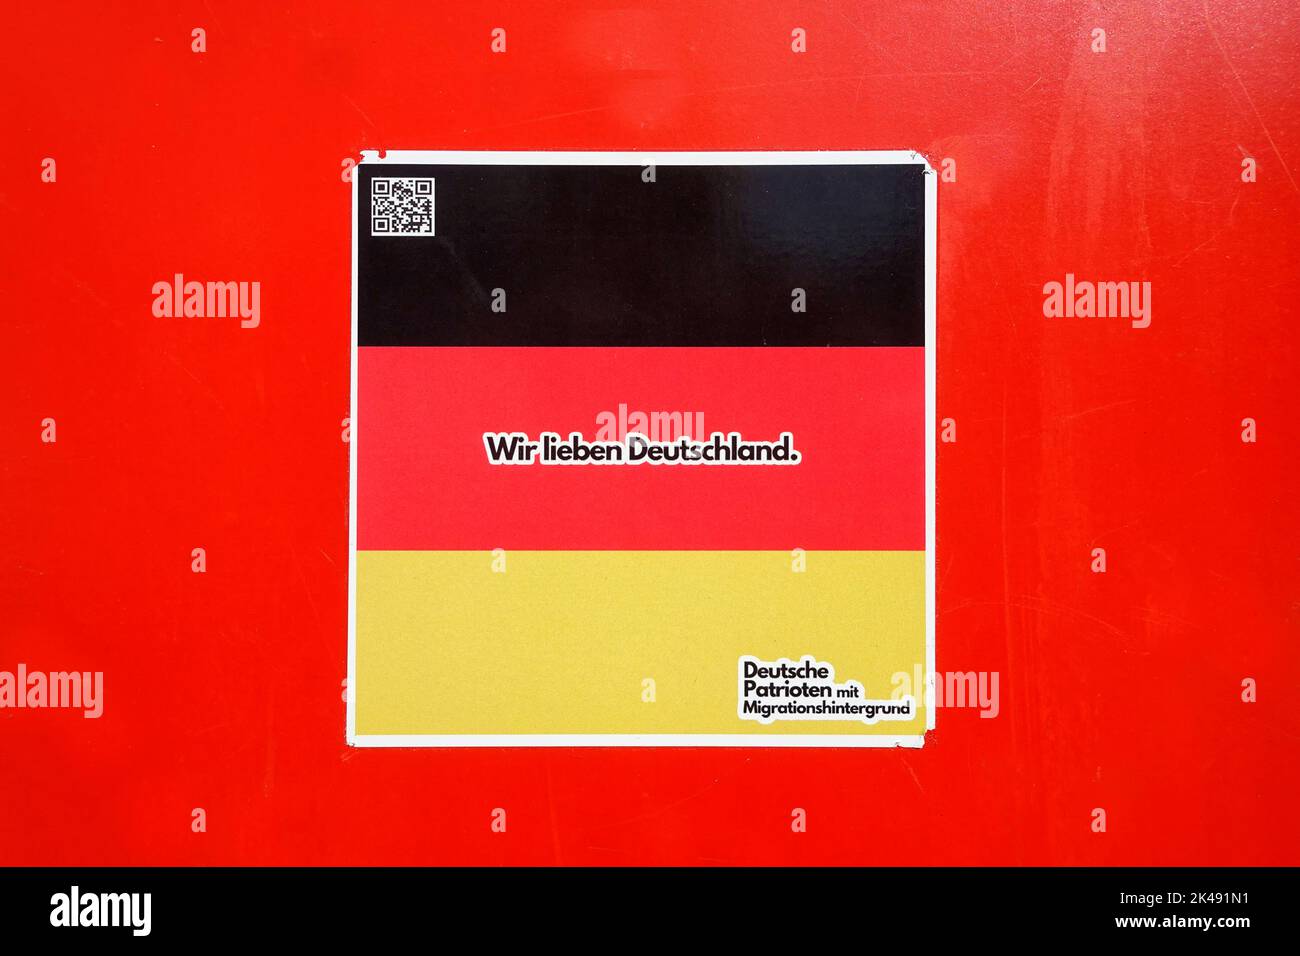 Sticker, amiamo la Germania, patrioti tedeschi con un background migratorio, Berlino, Germania Foto Stock